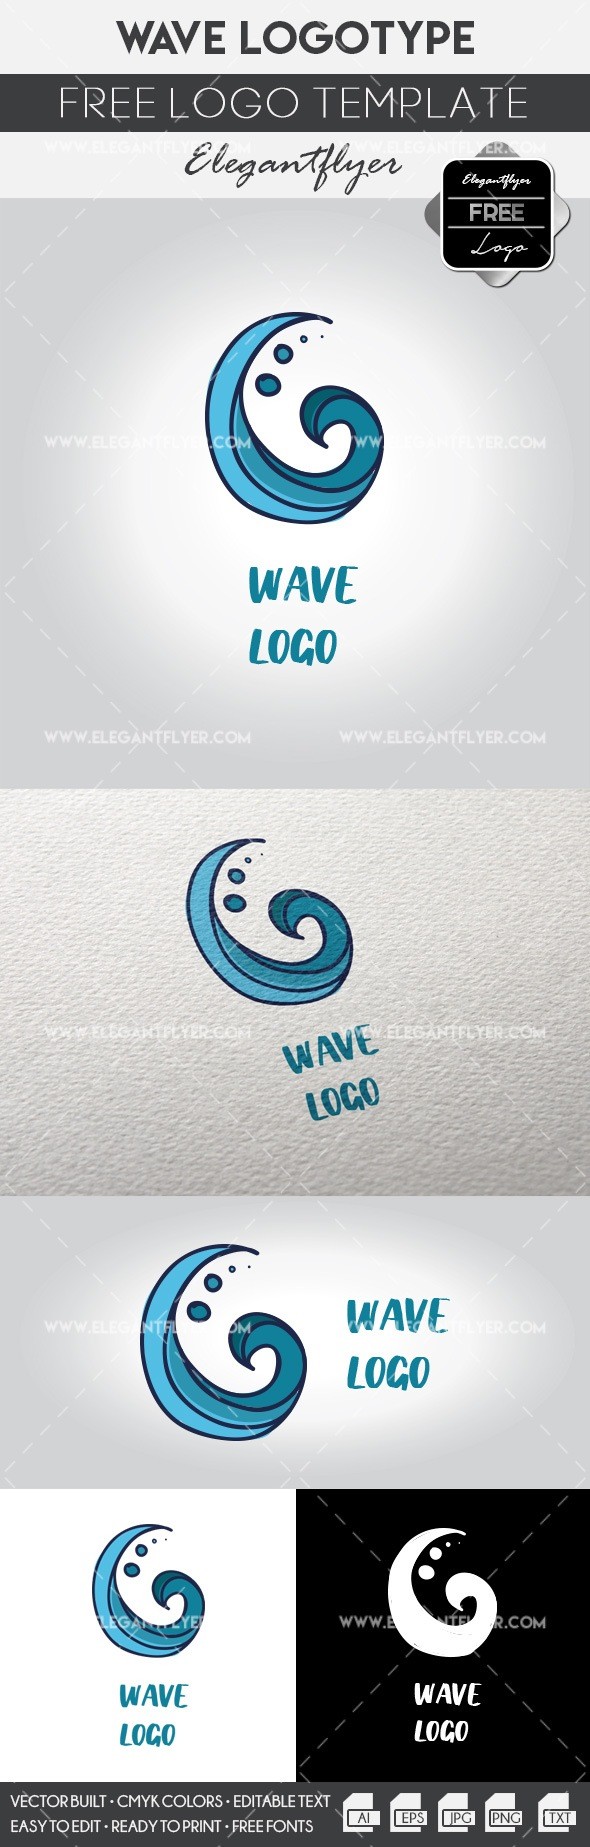 Wave logo by ElegantFlyer